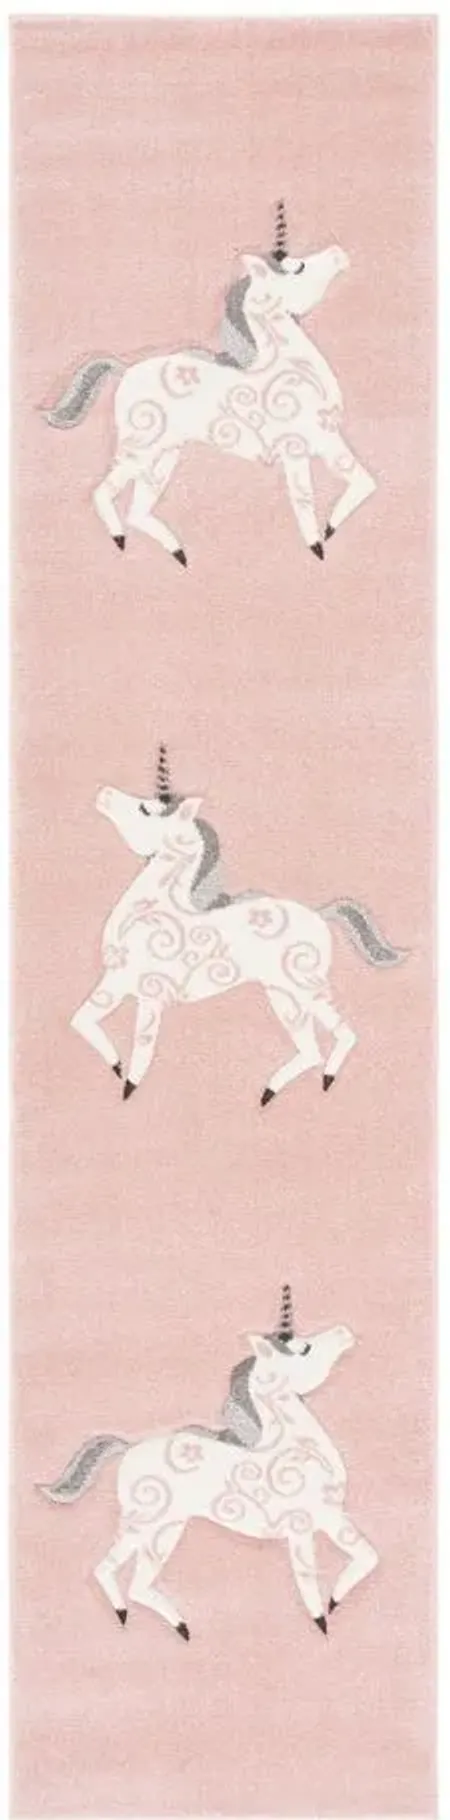 Carousel Unicorn Kids Runner Rug in Pink & Ivory by Safavieh